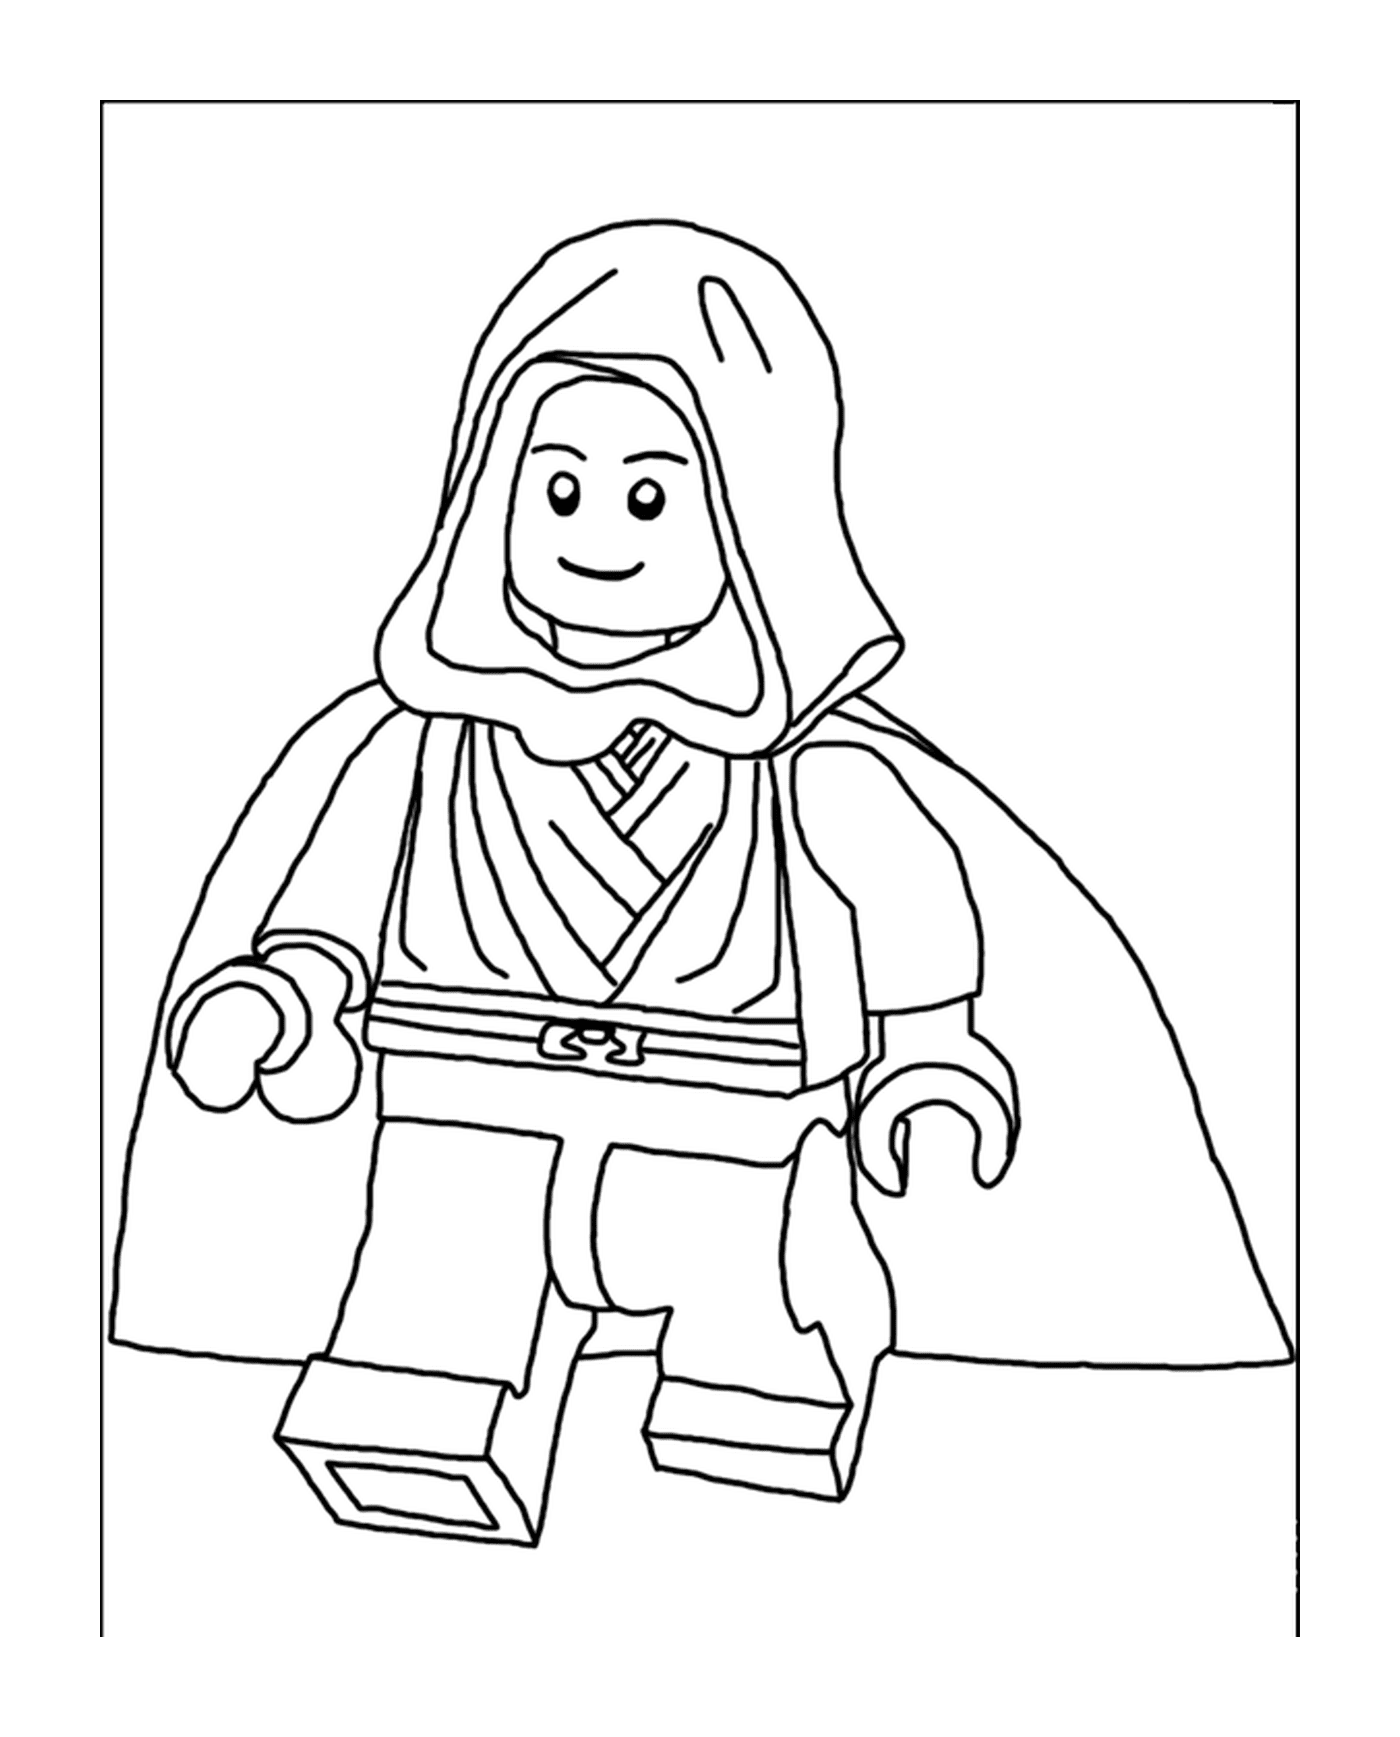  Character Lego Star Wars 